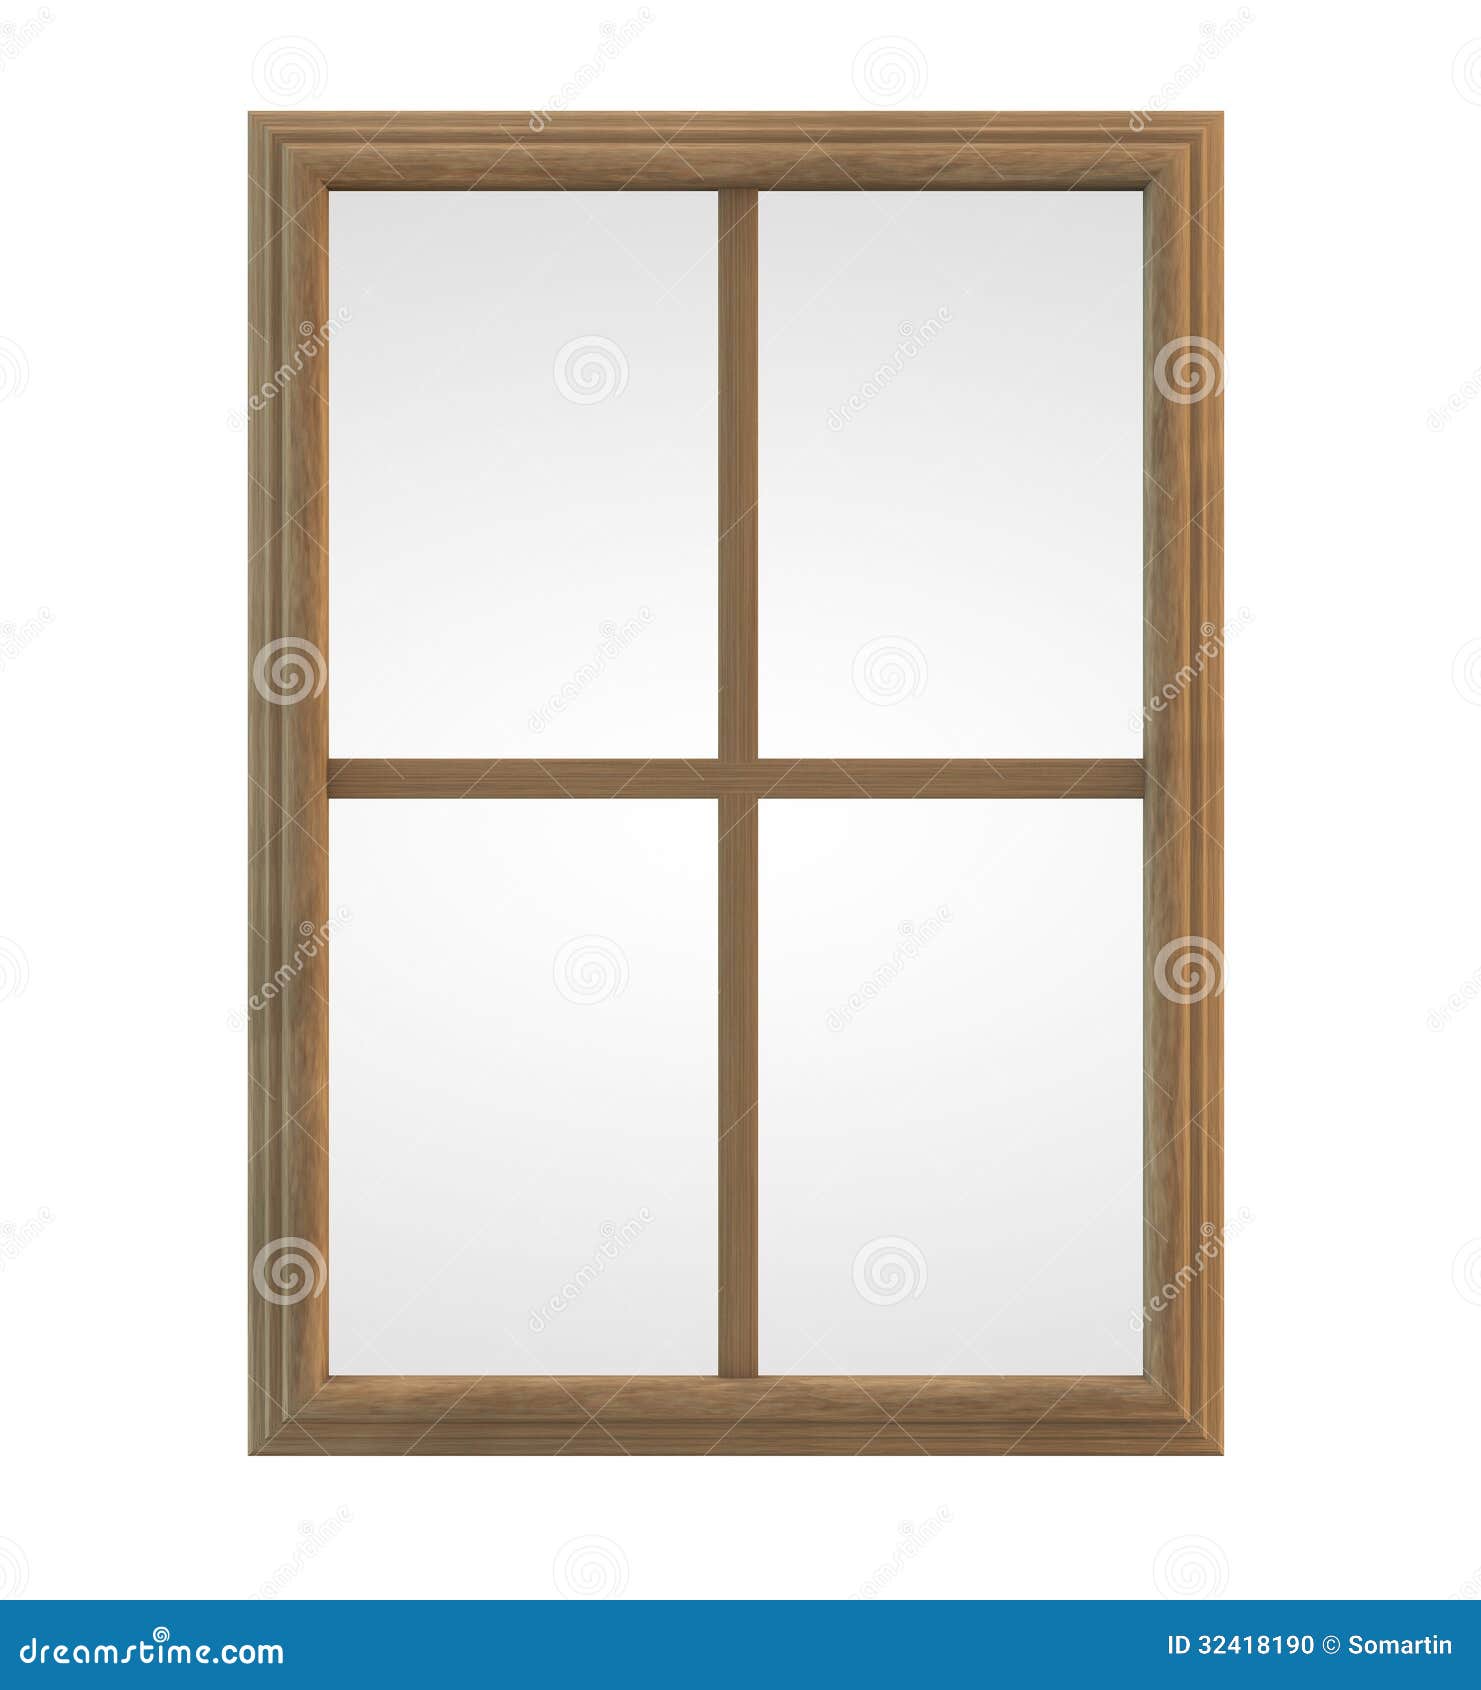 clipart window frame - photo #44